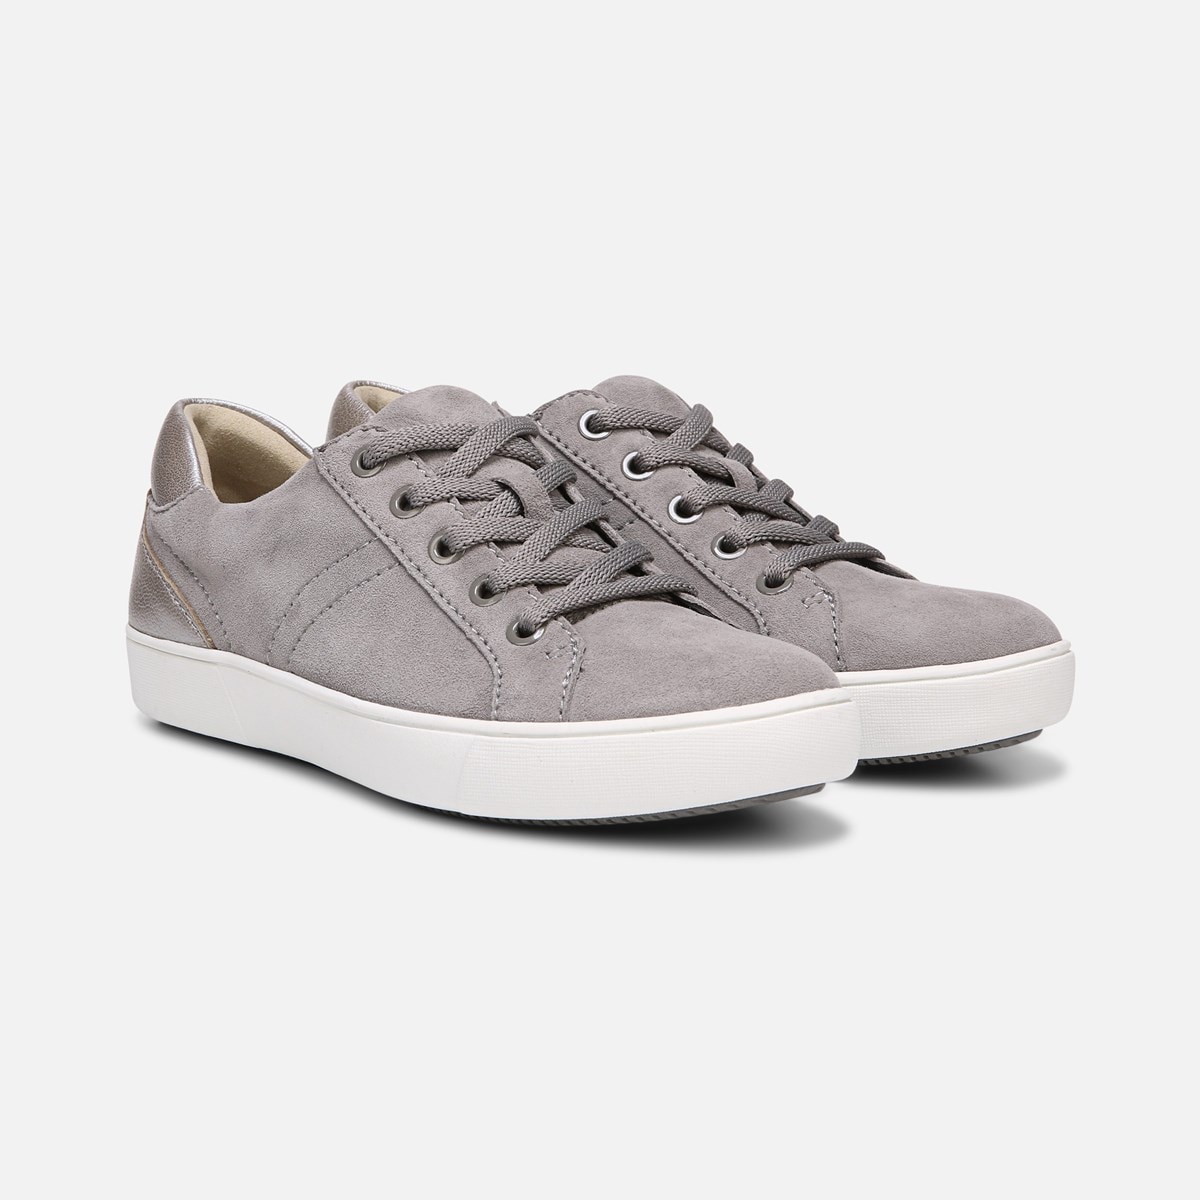 naturalizer grey shoes